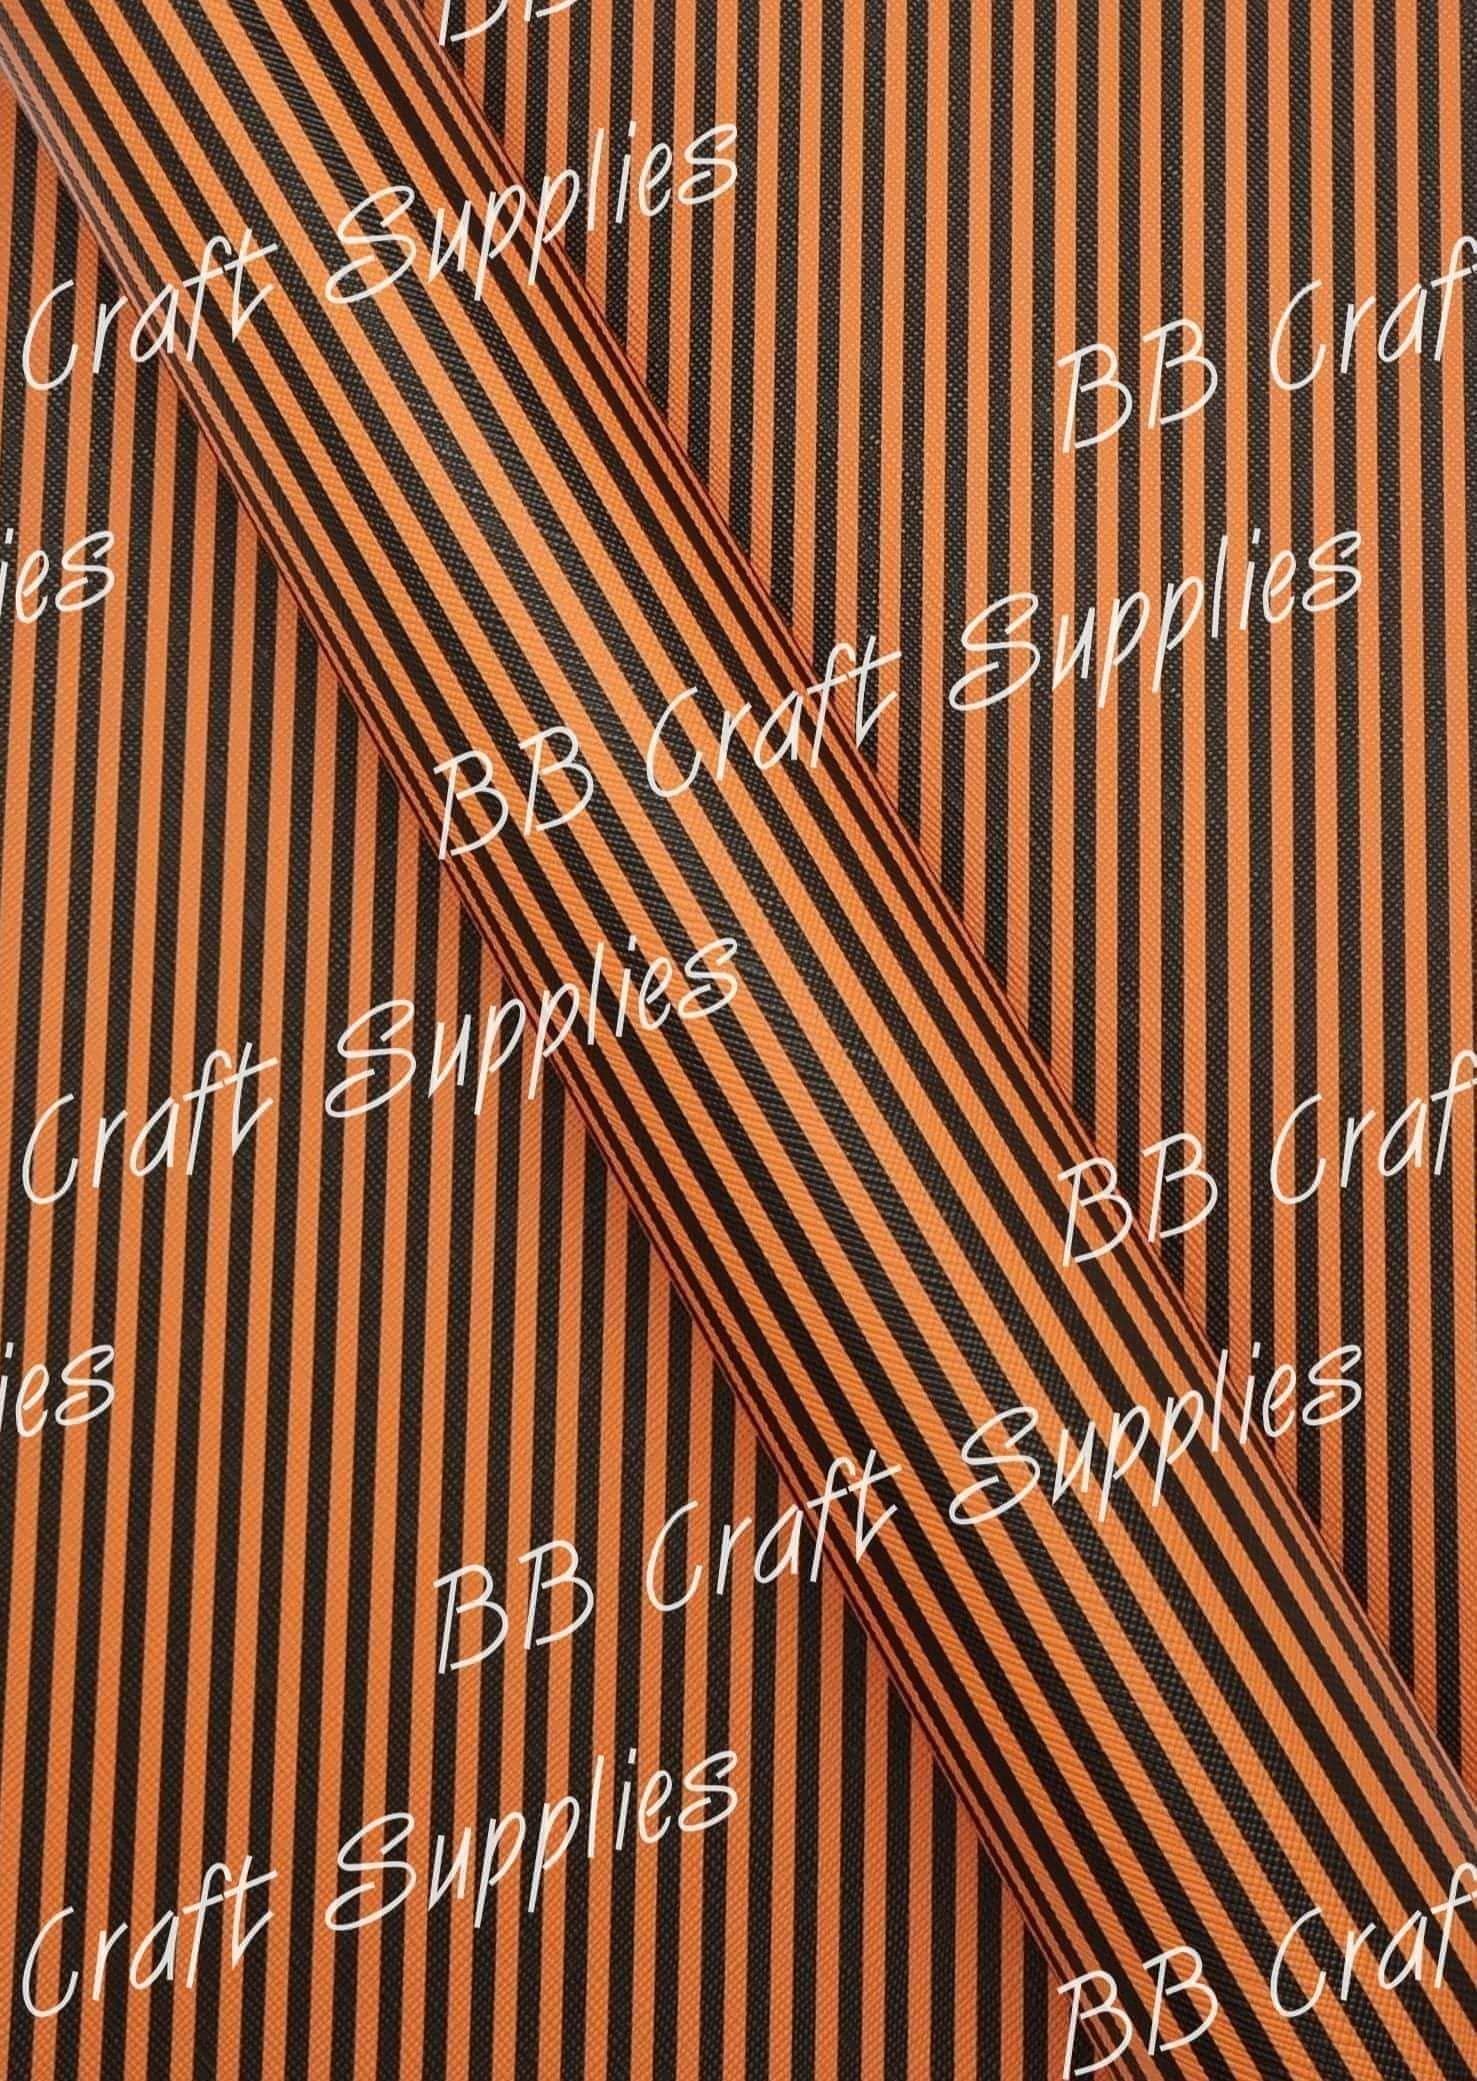 Orange Stripe Faux Leather - Faux, Faux Leather, Leather, leatherette, Orange, Stripe - Bare Butler Faux Leather Supplies 